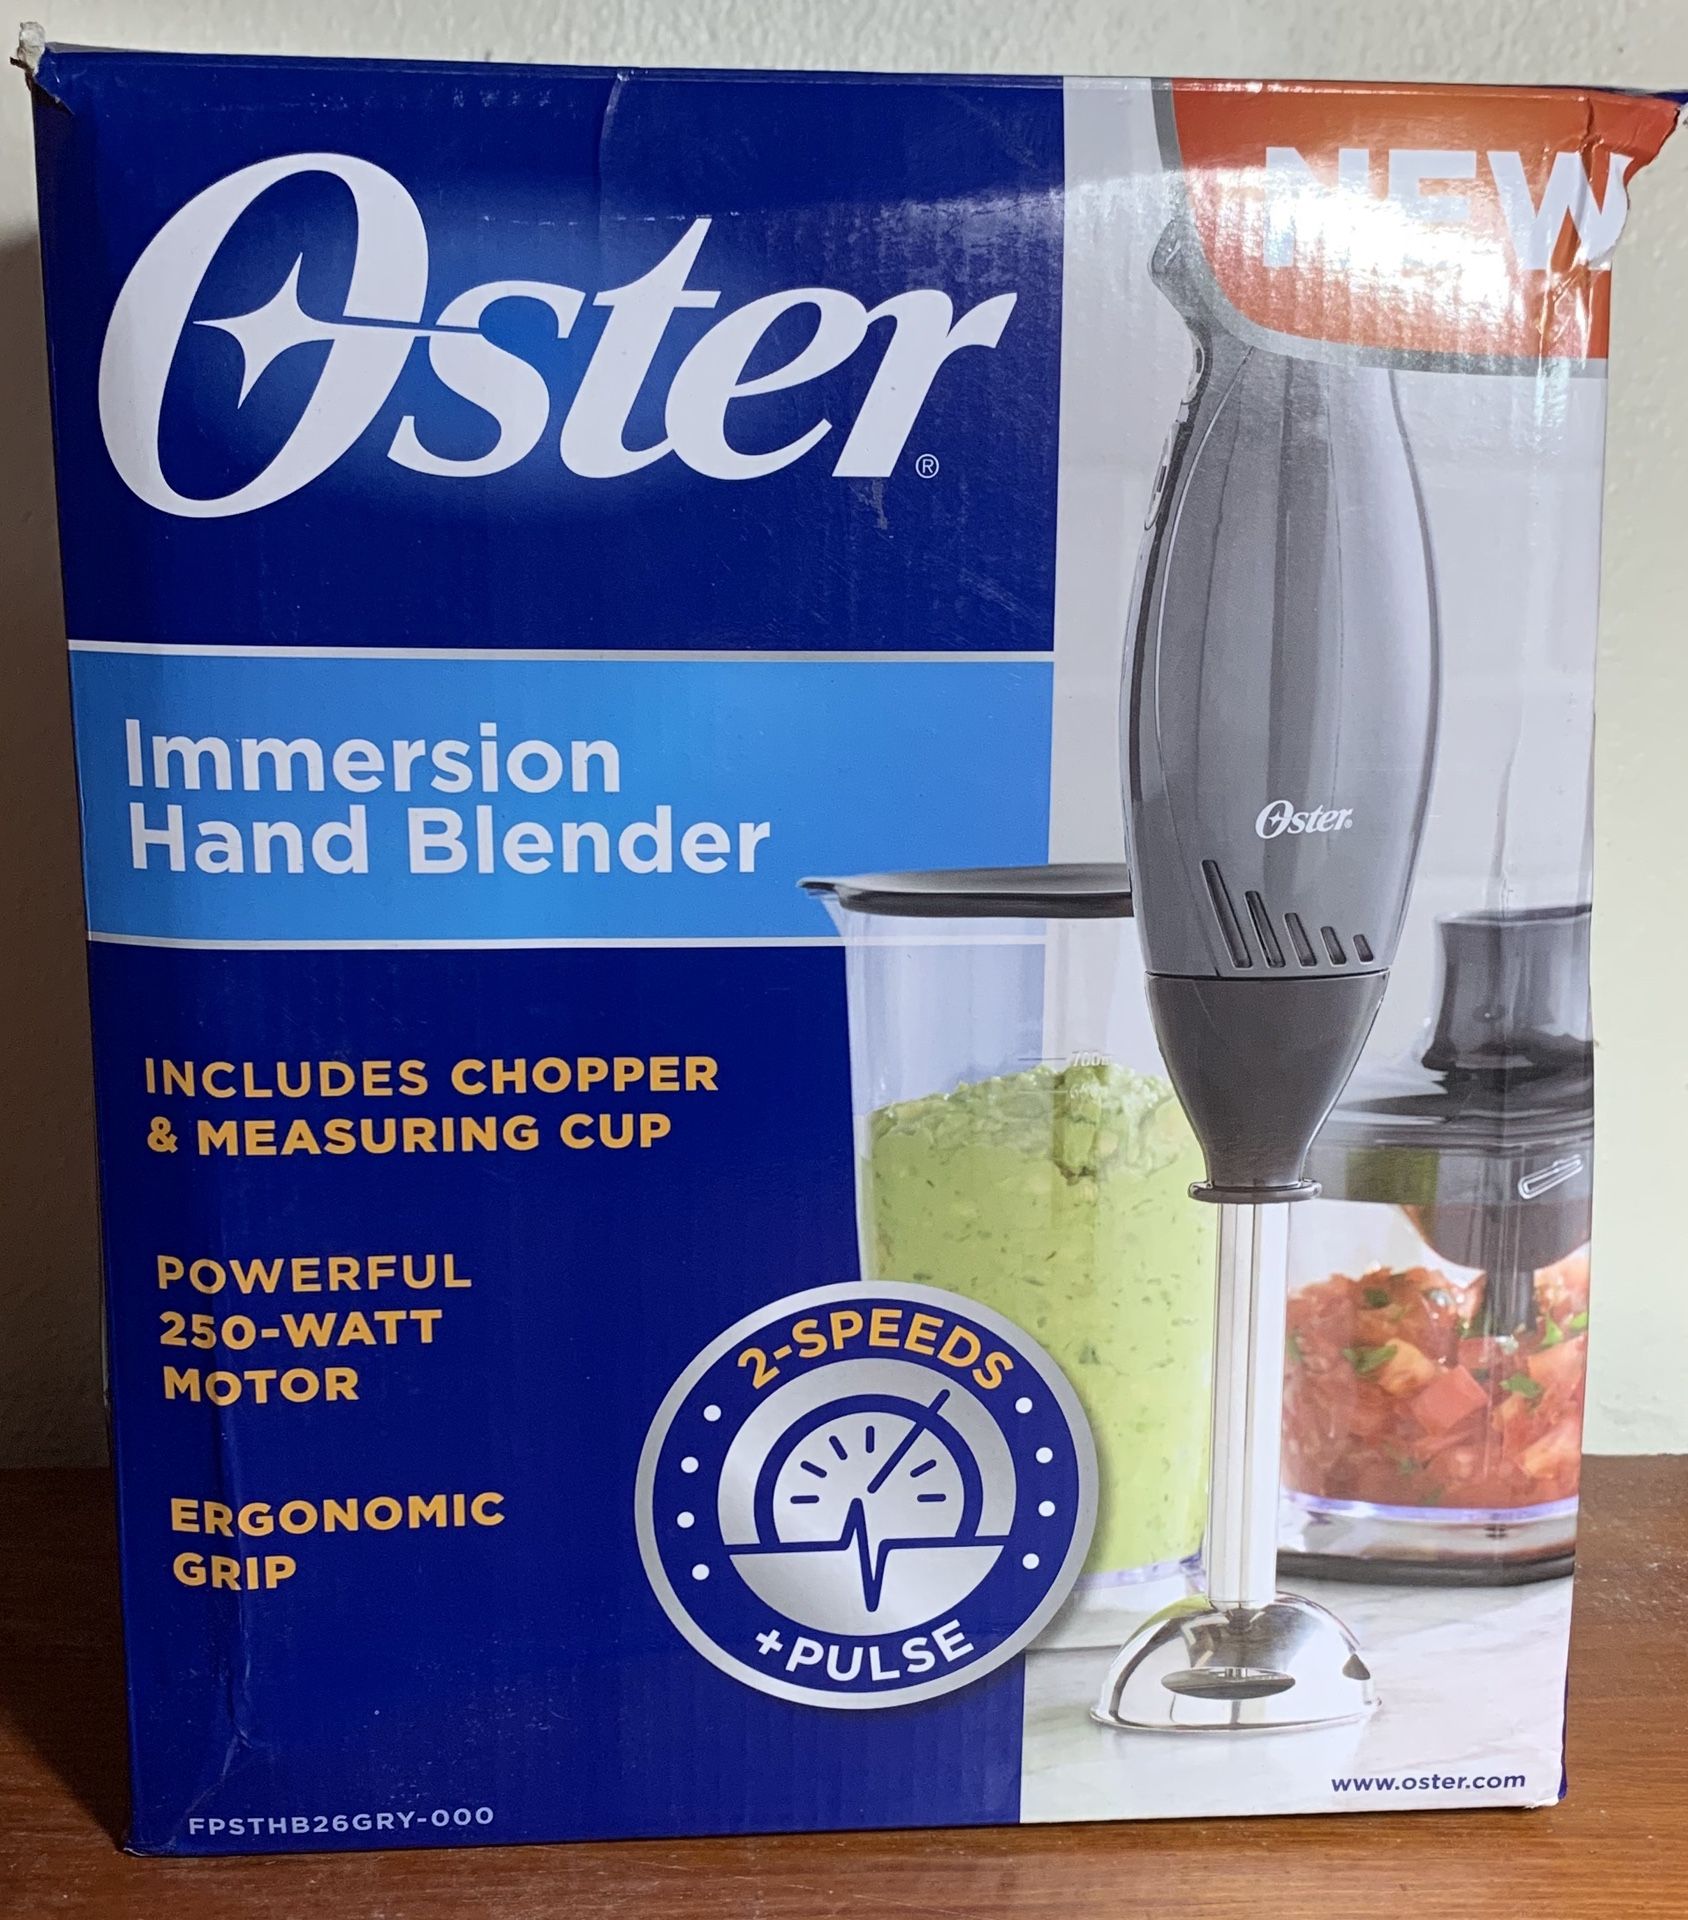 “Oster” Immersion Hand Blender